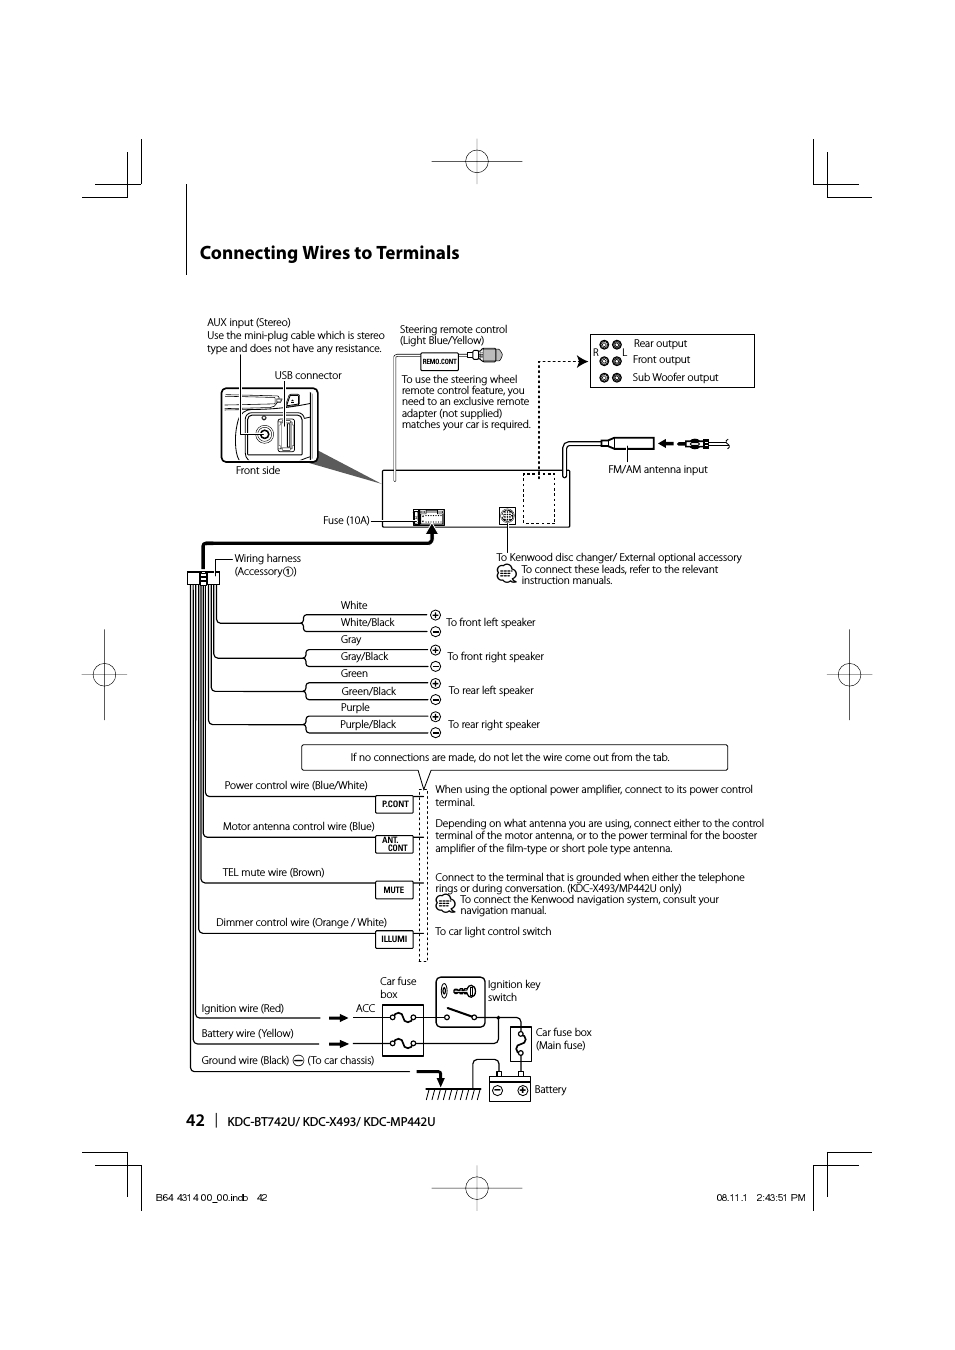 Connecting Wires To Terminals | Kenwood Kdc-Bt742U User Manual - Kenwood Kdc Wiring Diagram